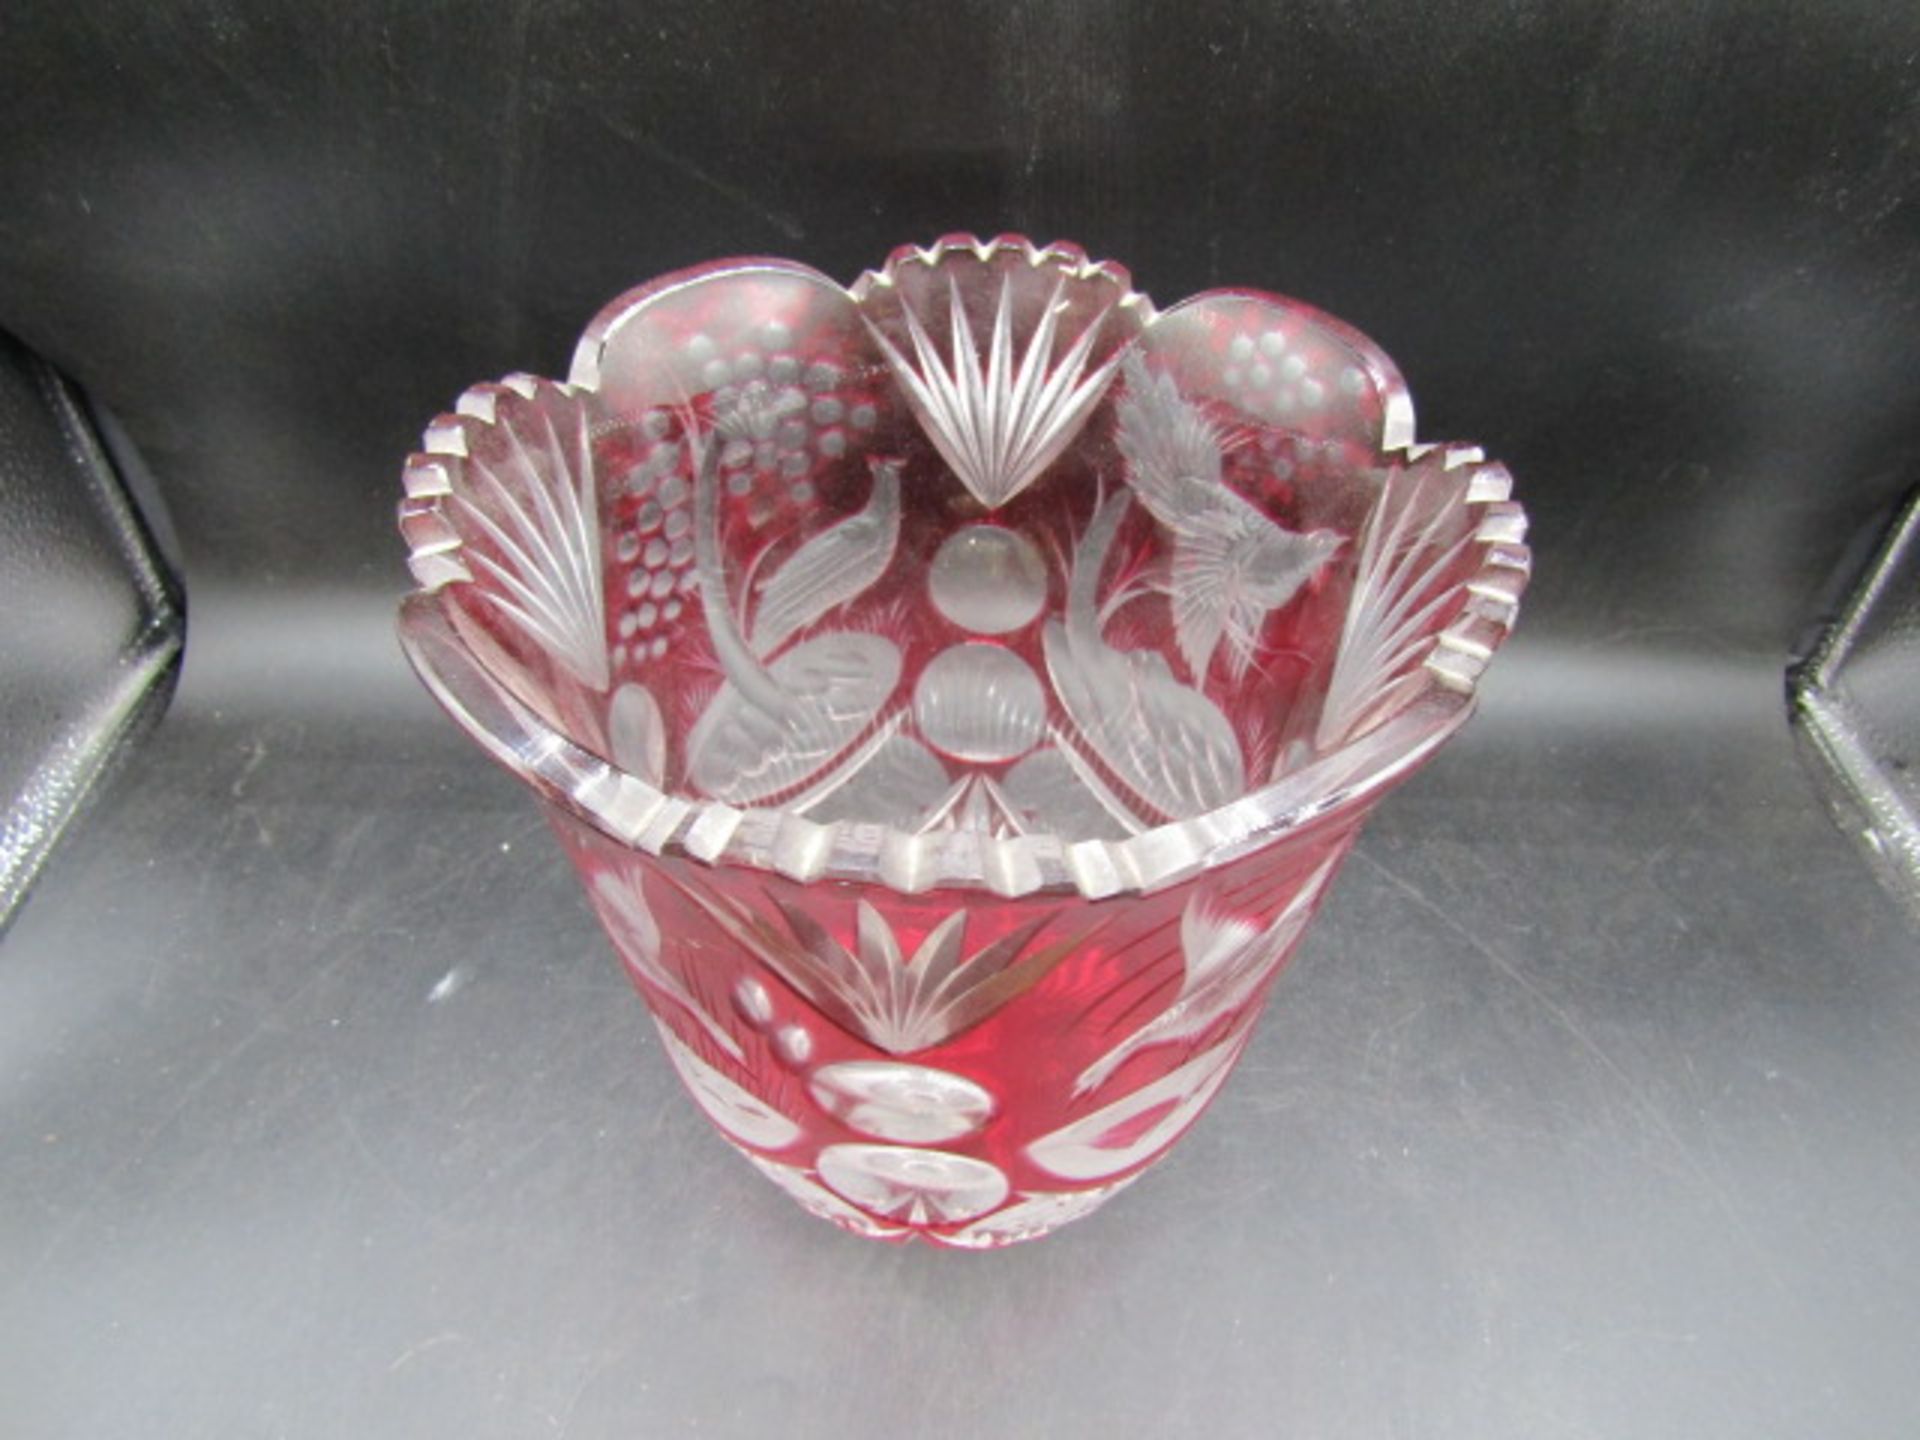 Bohemia ruby red vase 20cmH - Image 2 of 2